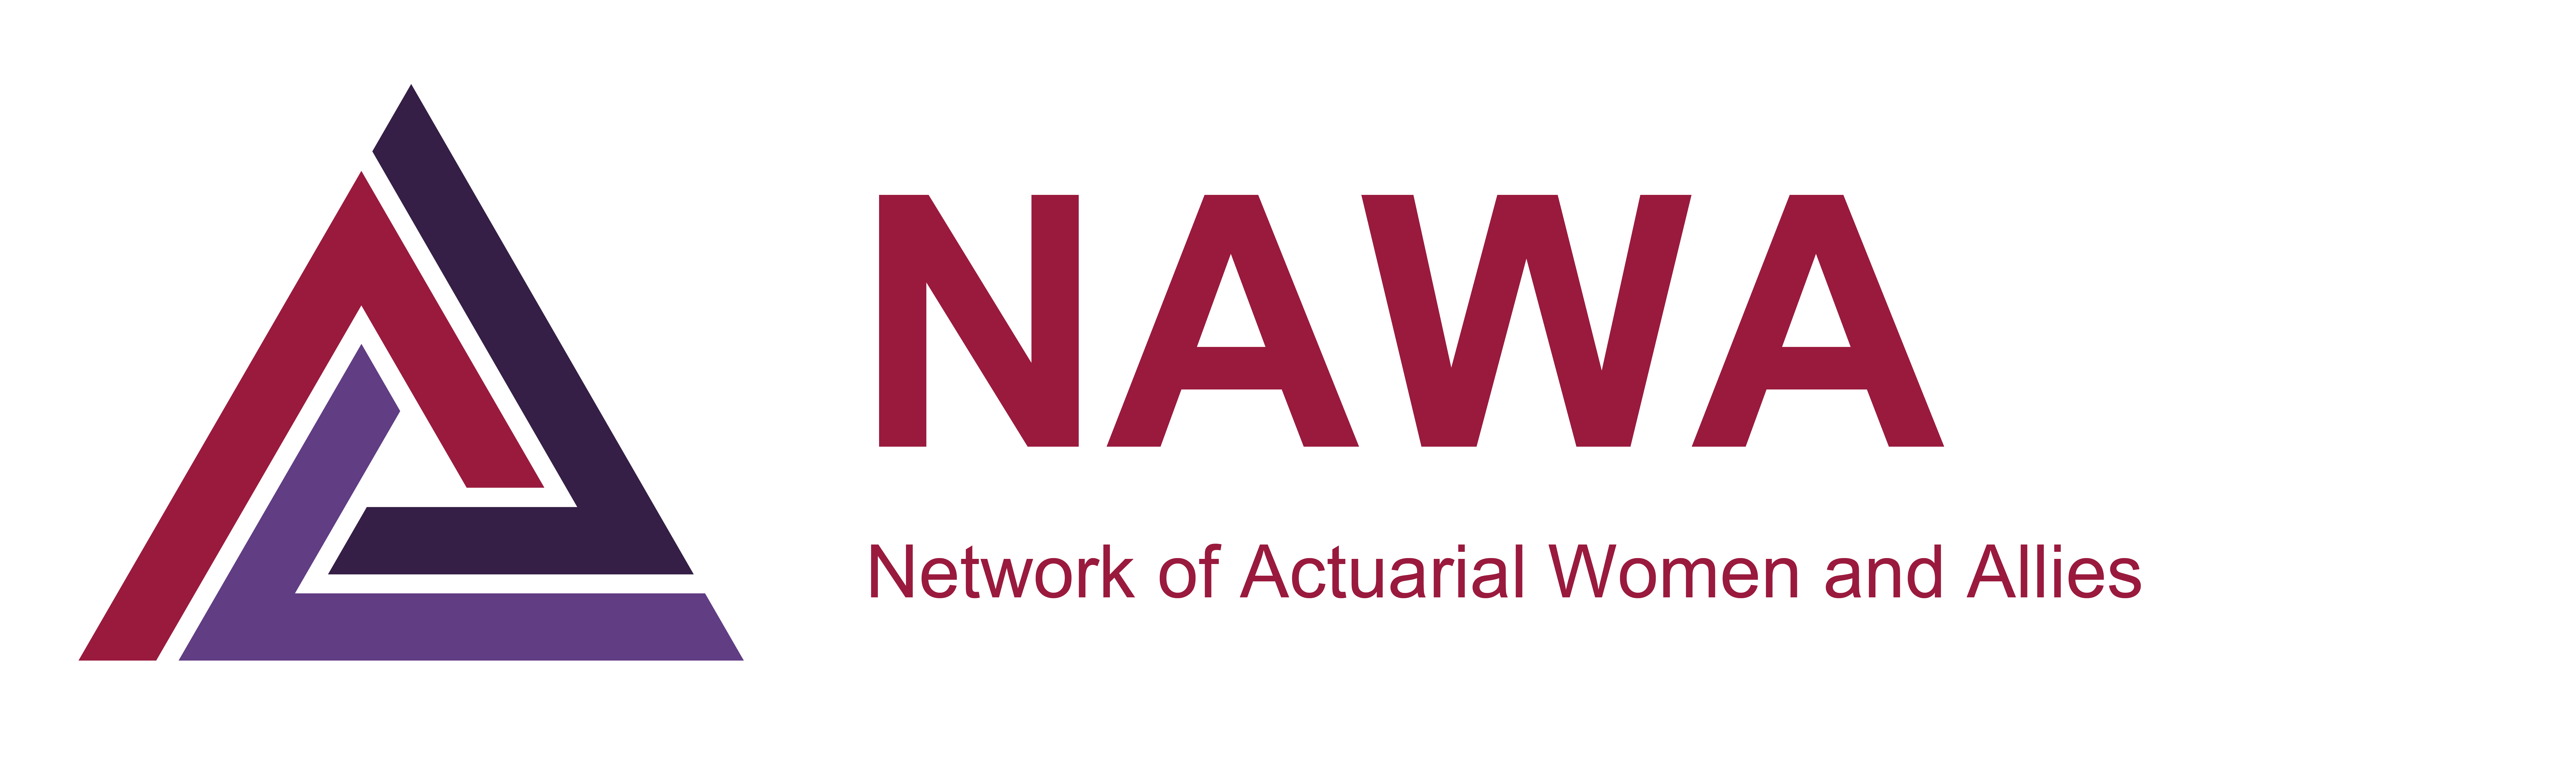 NAWA logo for diversity page